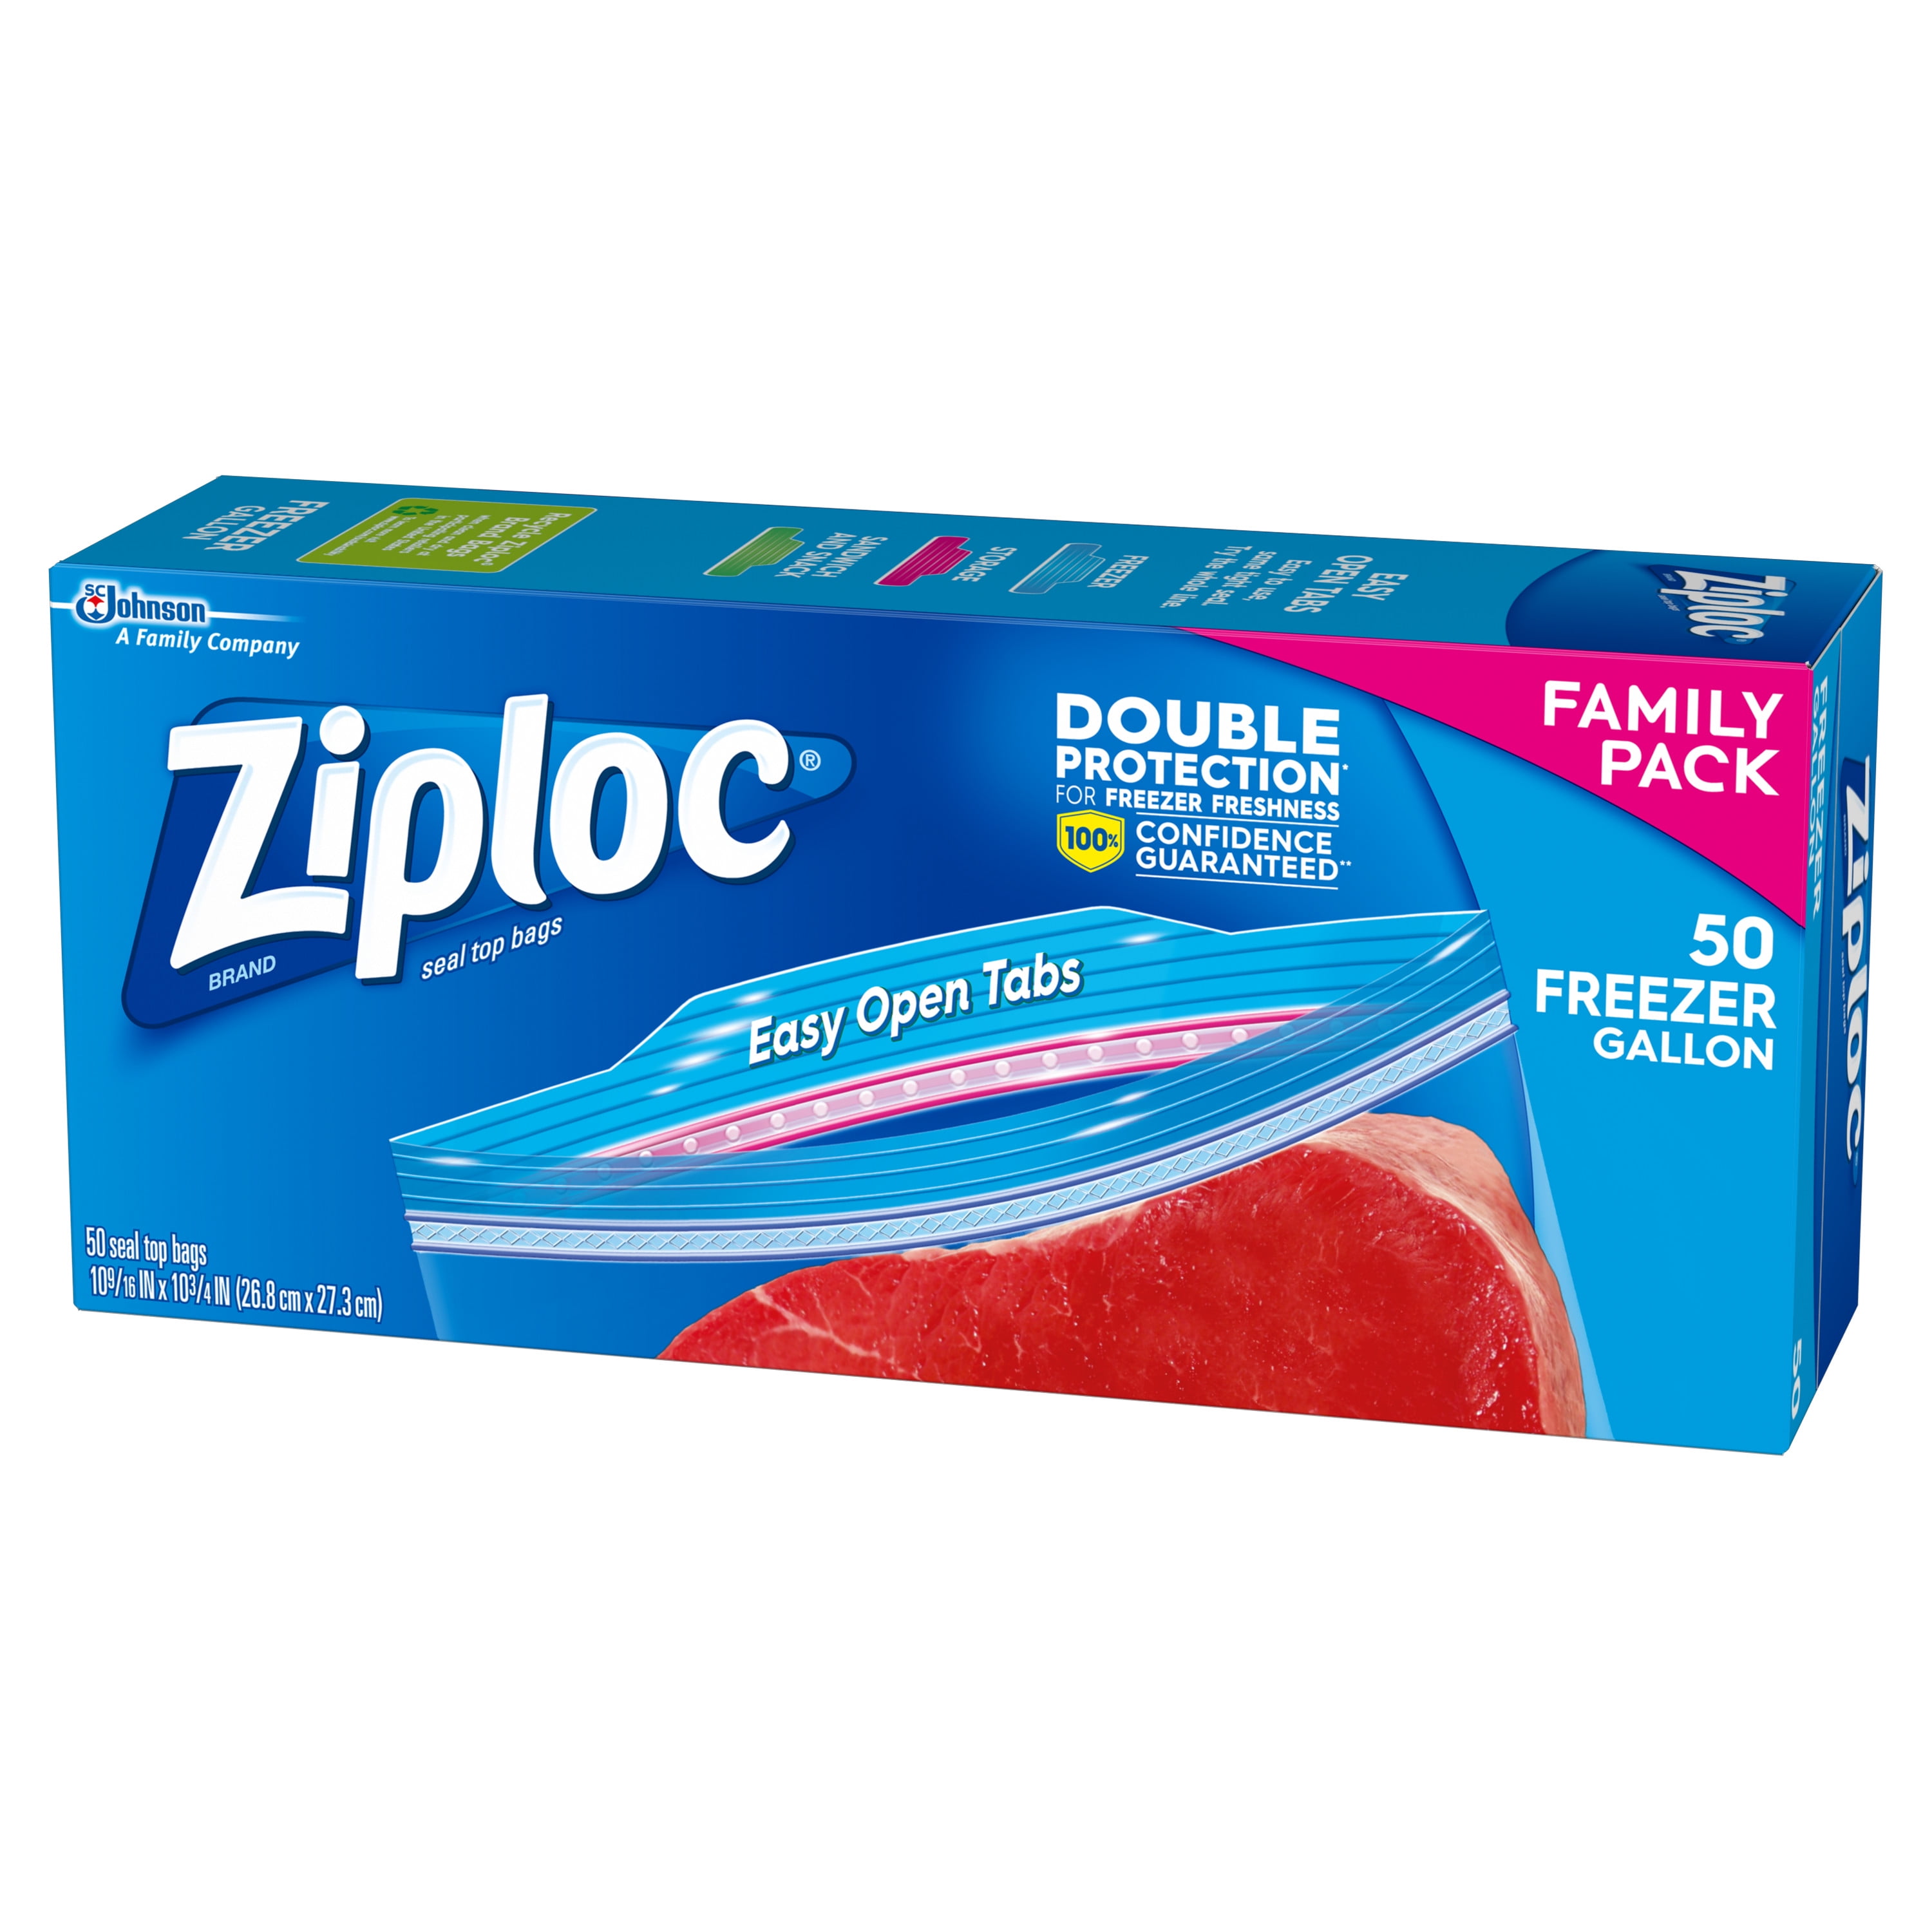 Ziploc® Gallon Freezer Bags with Stay Open Design, 80 ct - Fry's